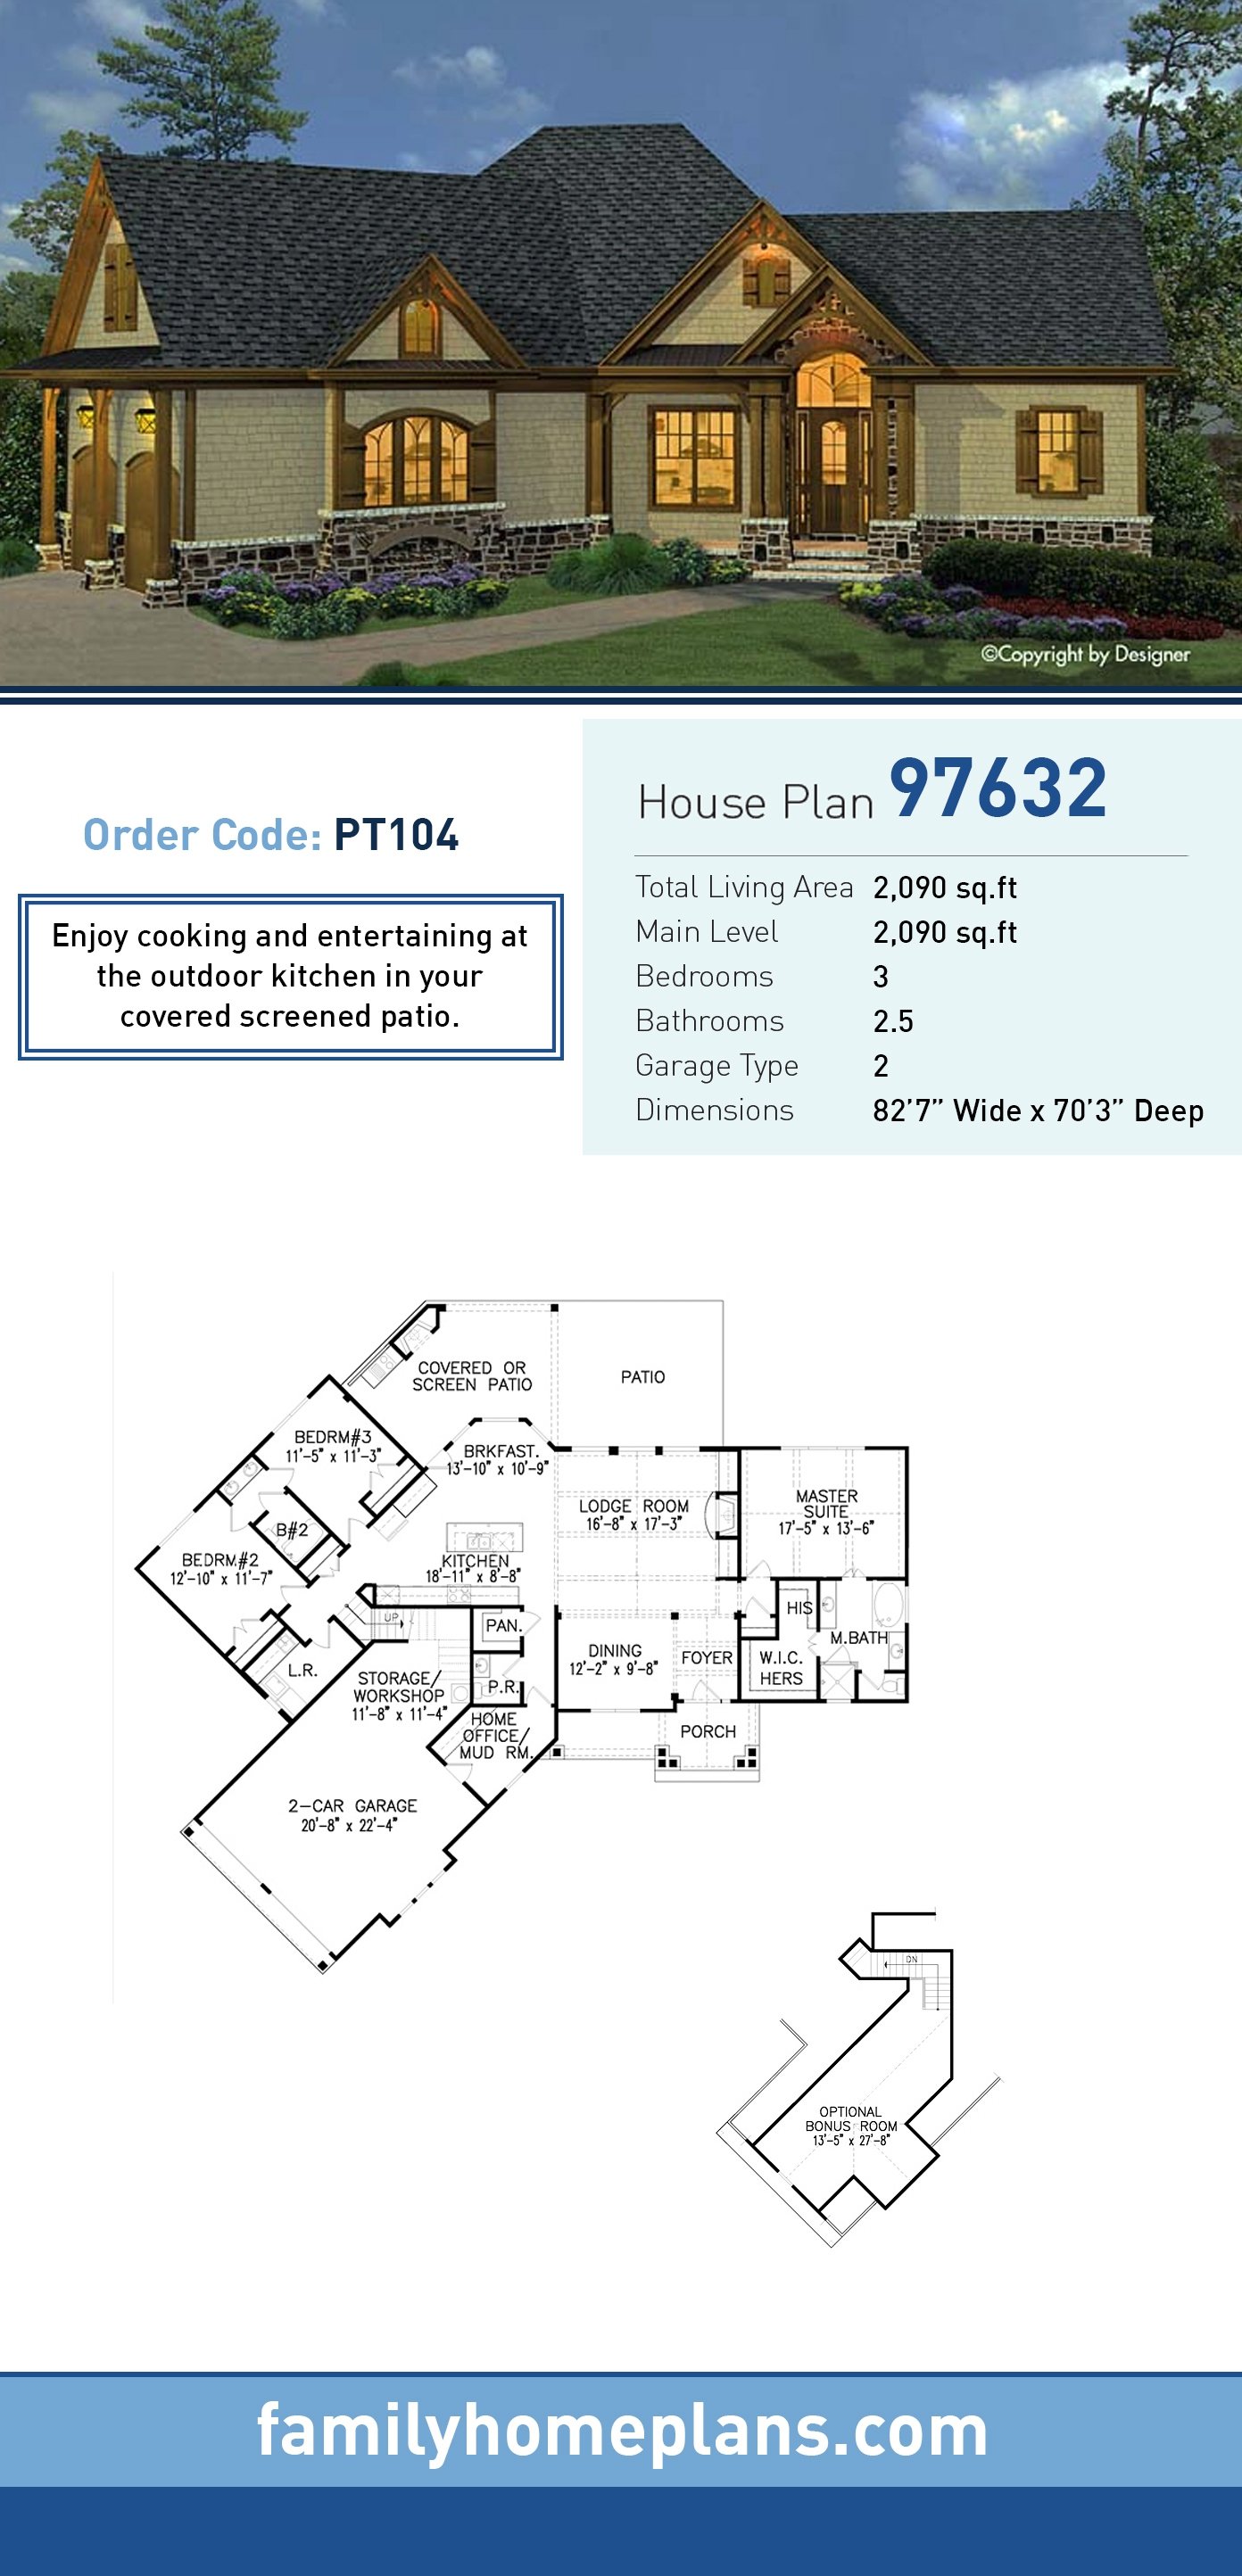 House Plan 97632